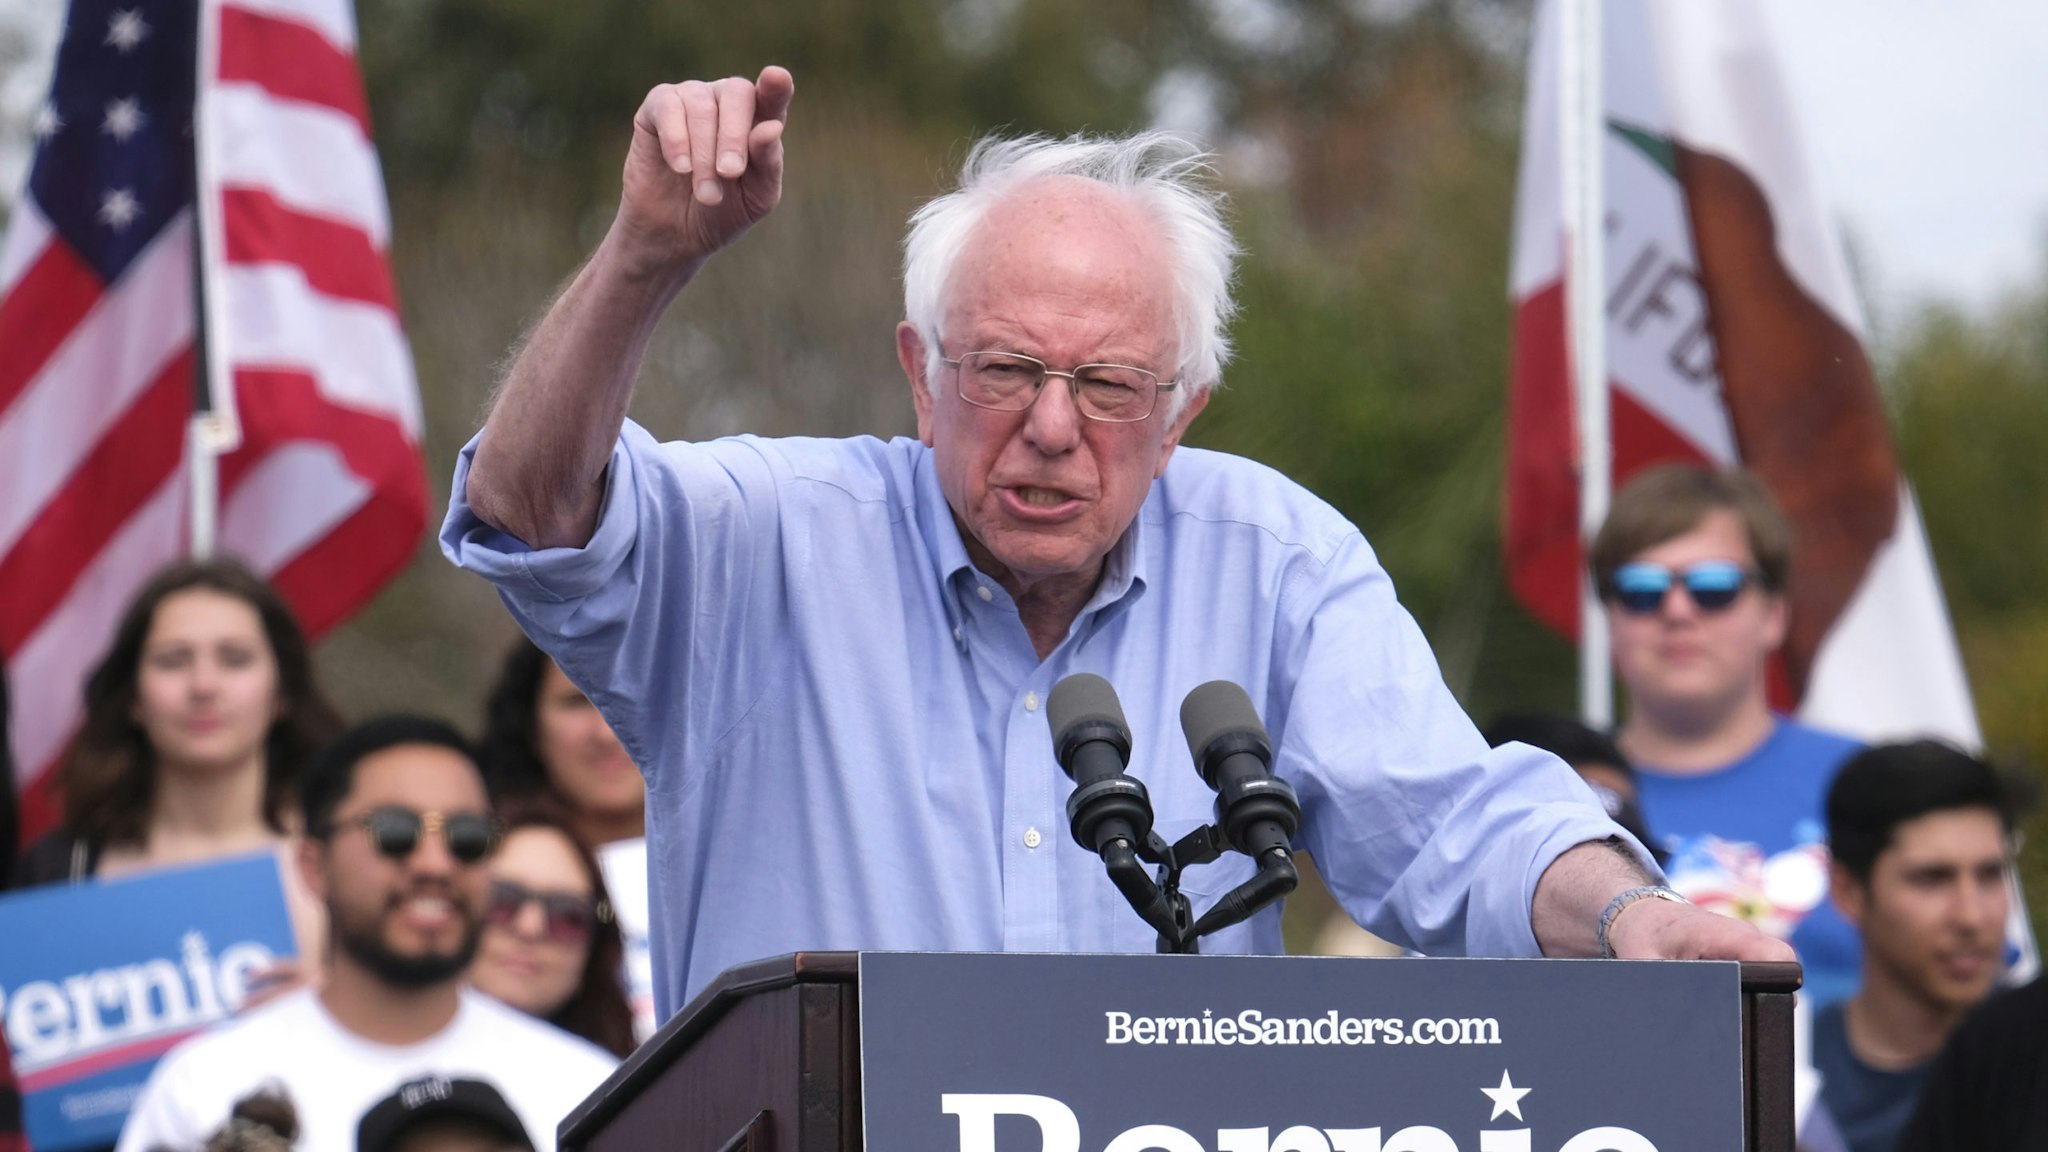 Democratic presidential hopeful Vermont Senator Bernie Sanders gestures as he speaks during a rally at Valley High School in Santa Ana, California, February 21, 2020.